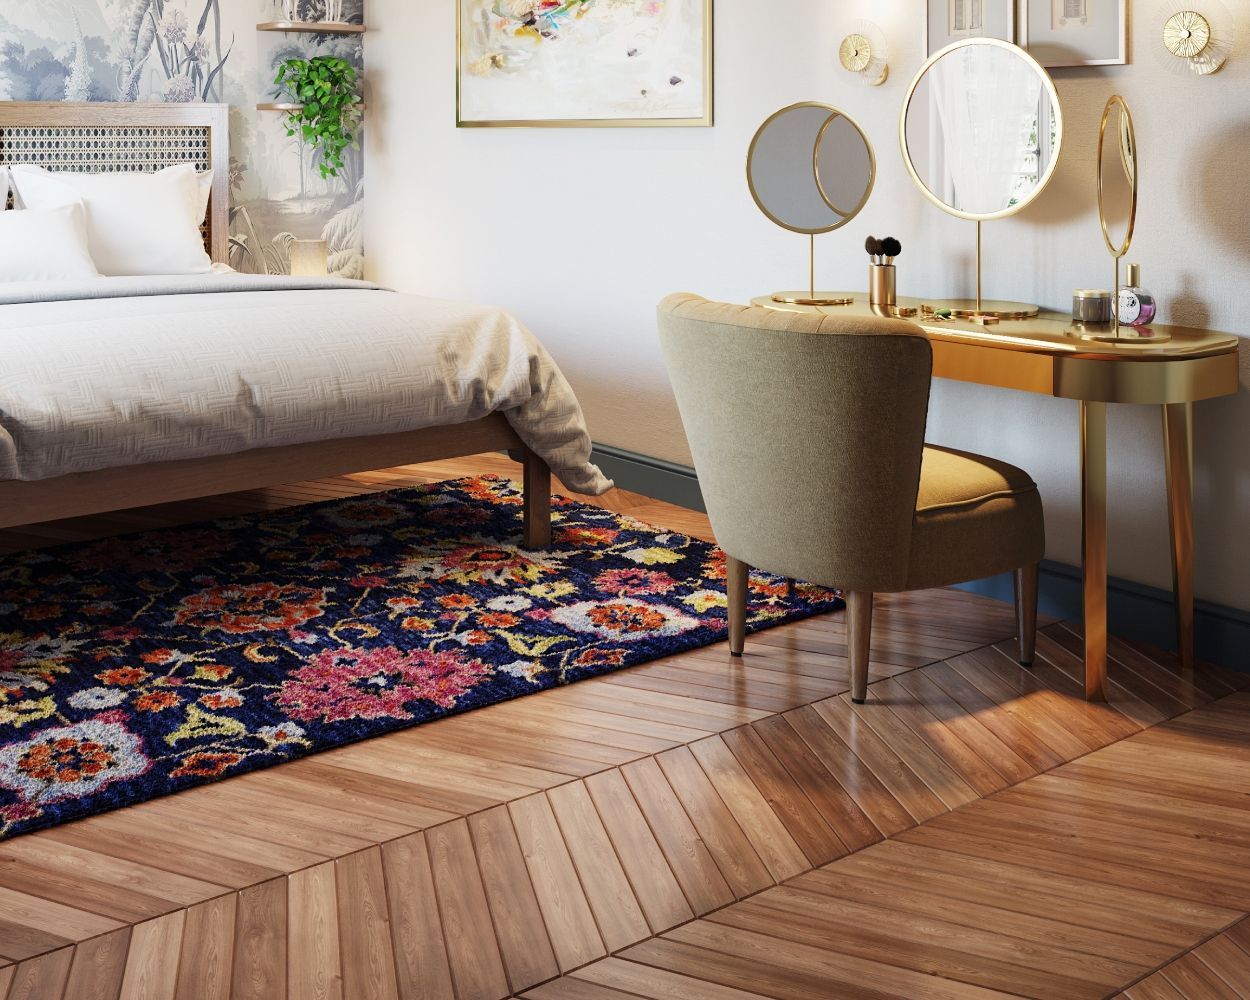 Contemporary Brown Herringbone Flooring Design For Bedrooms